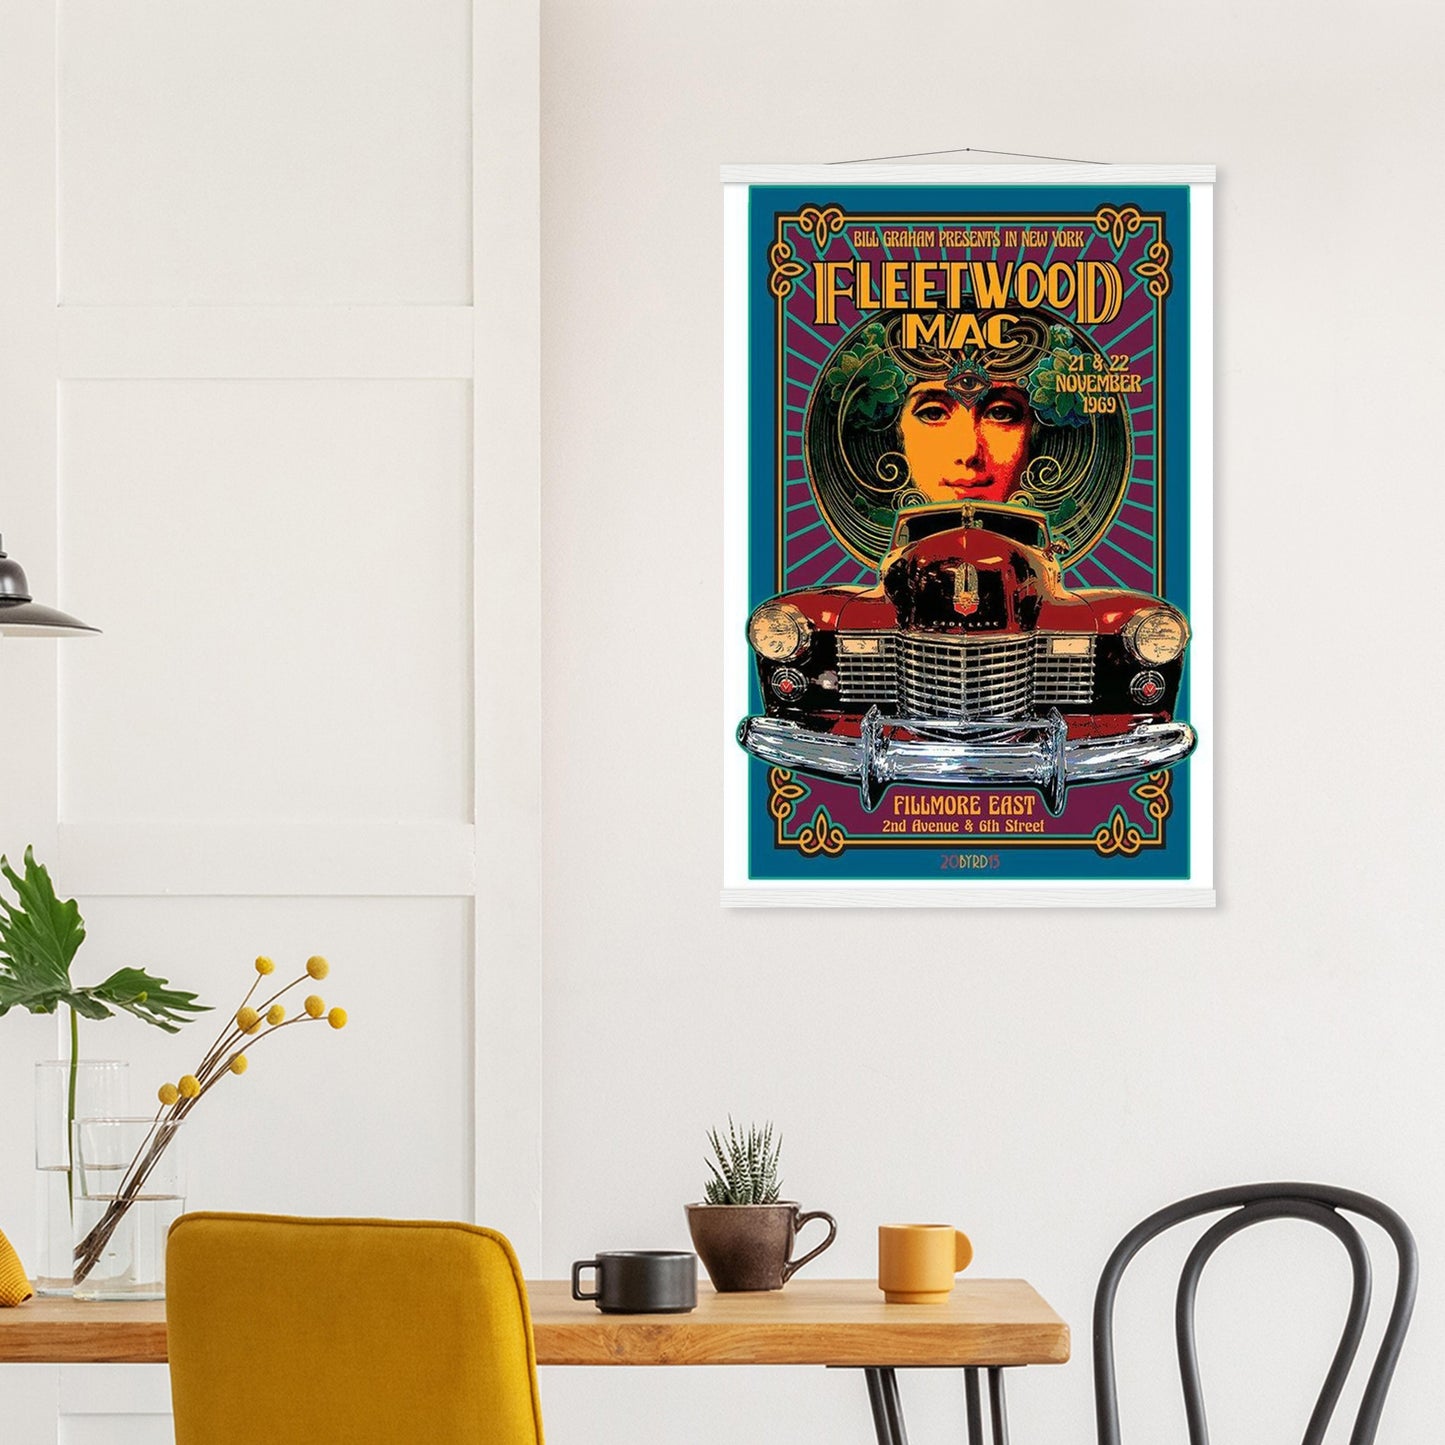 Fleetwood Mac Vintage Reprint Poster on Premium Matte Paper - Posterify